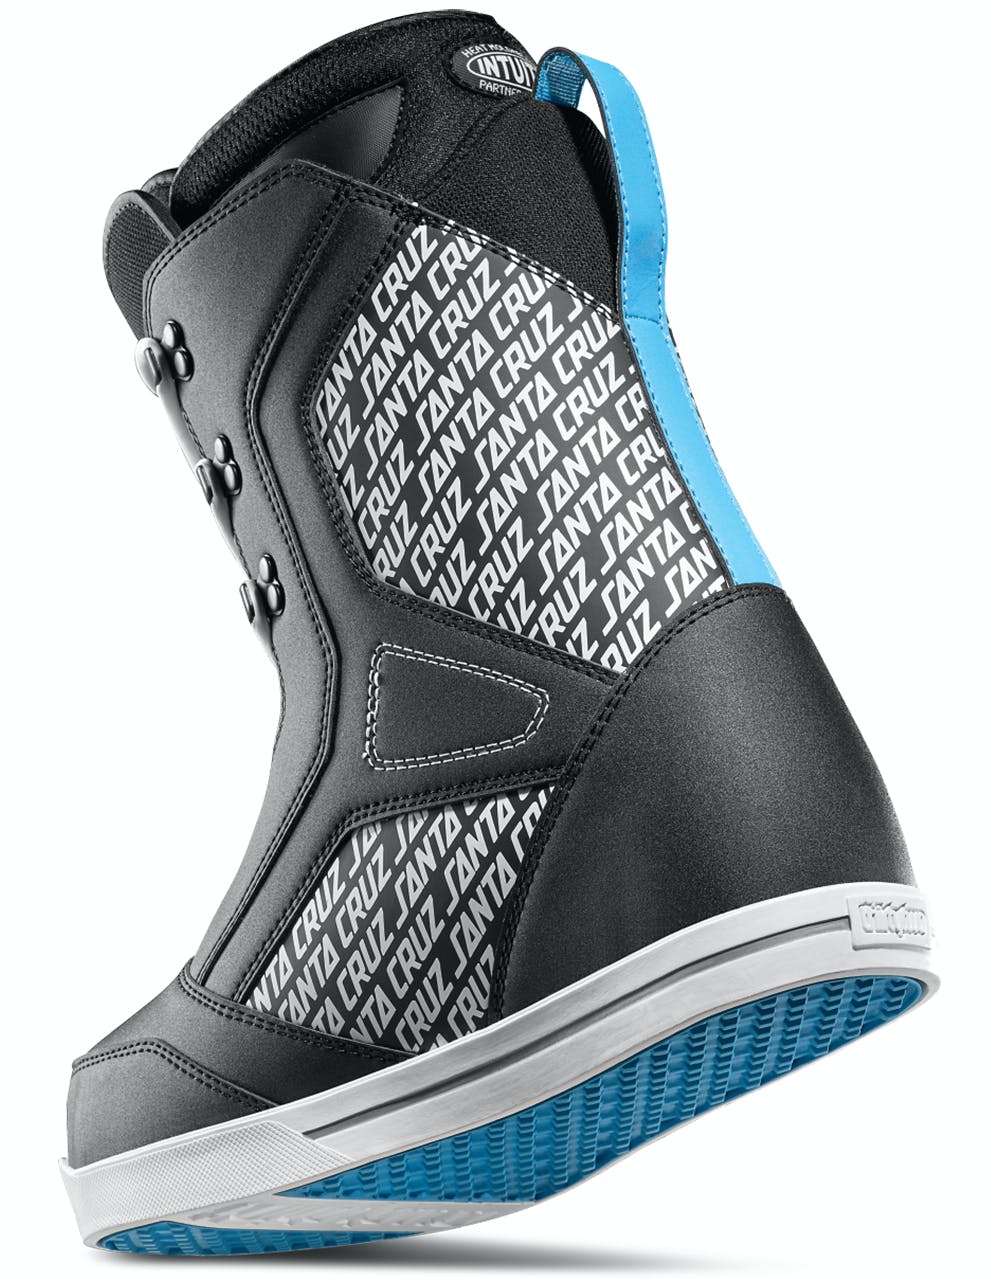 ThirtyTwo x Santa Cruz 86 2020 Snowboard Boots - Black/Blue/White